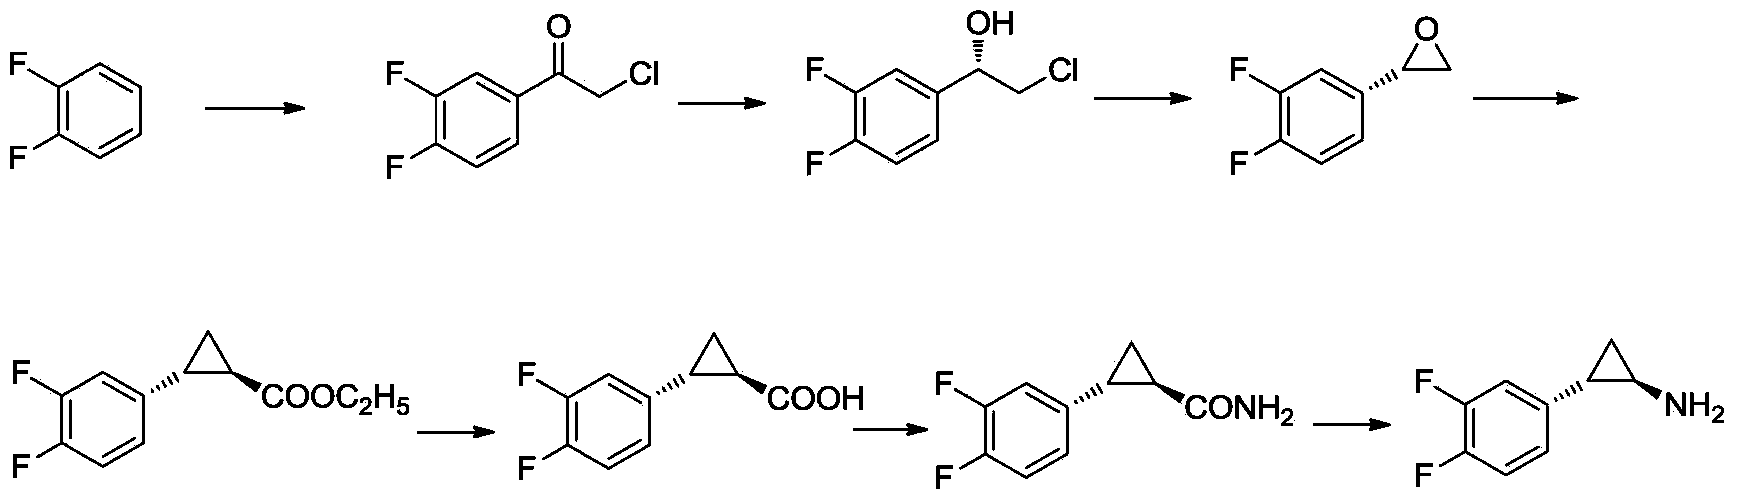 Method for preparing (1R,2S)-2-(3,4-difluorophenyl) -cyclopropylamine